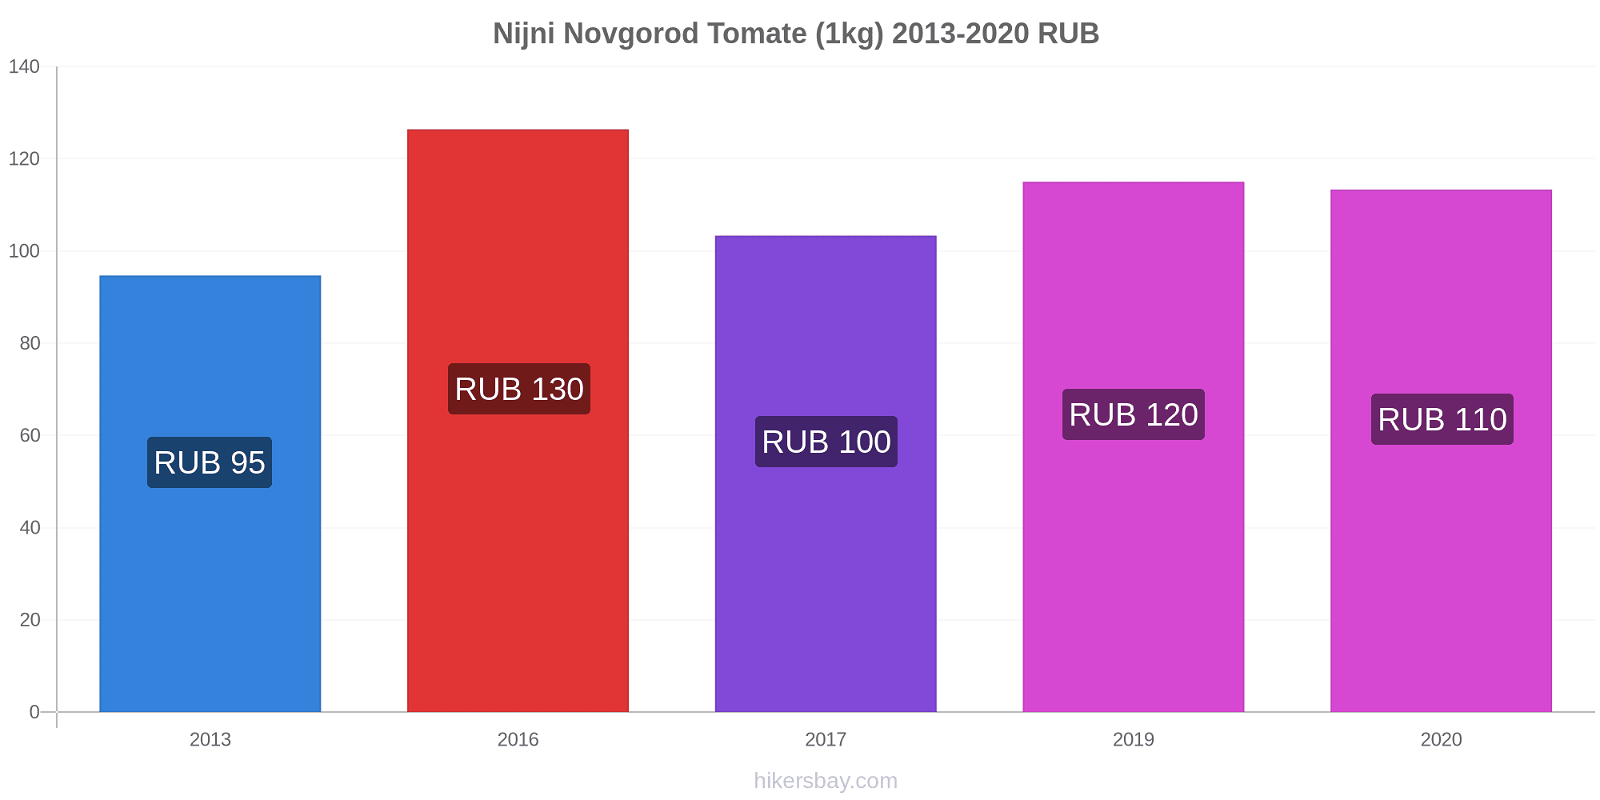 Nijni Novgorod modificări de preț Tomate (1kg) hikersbay.com